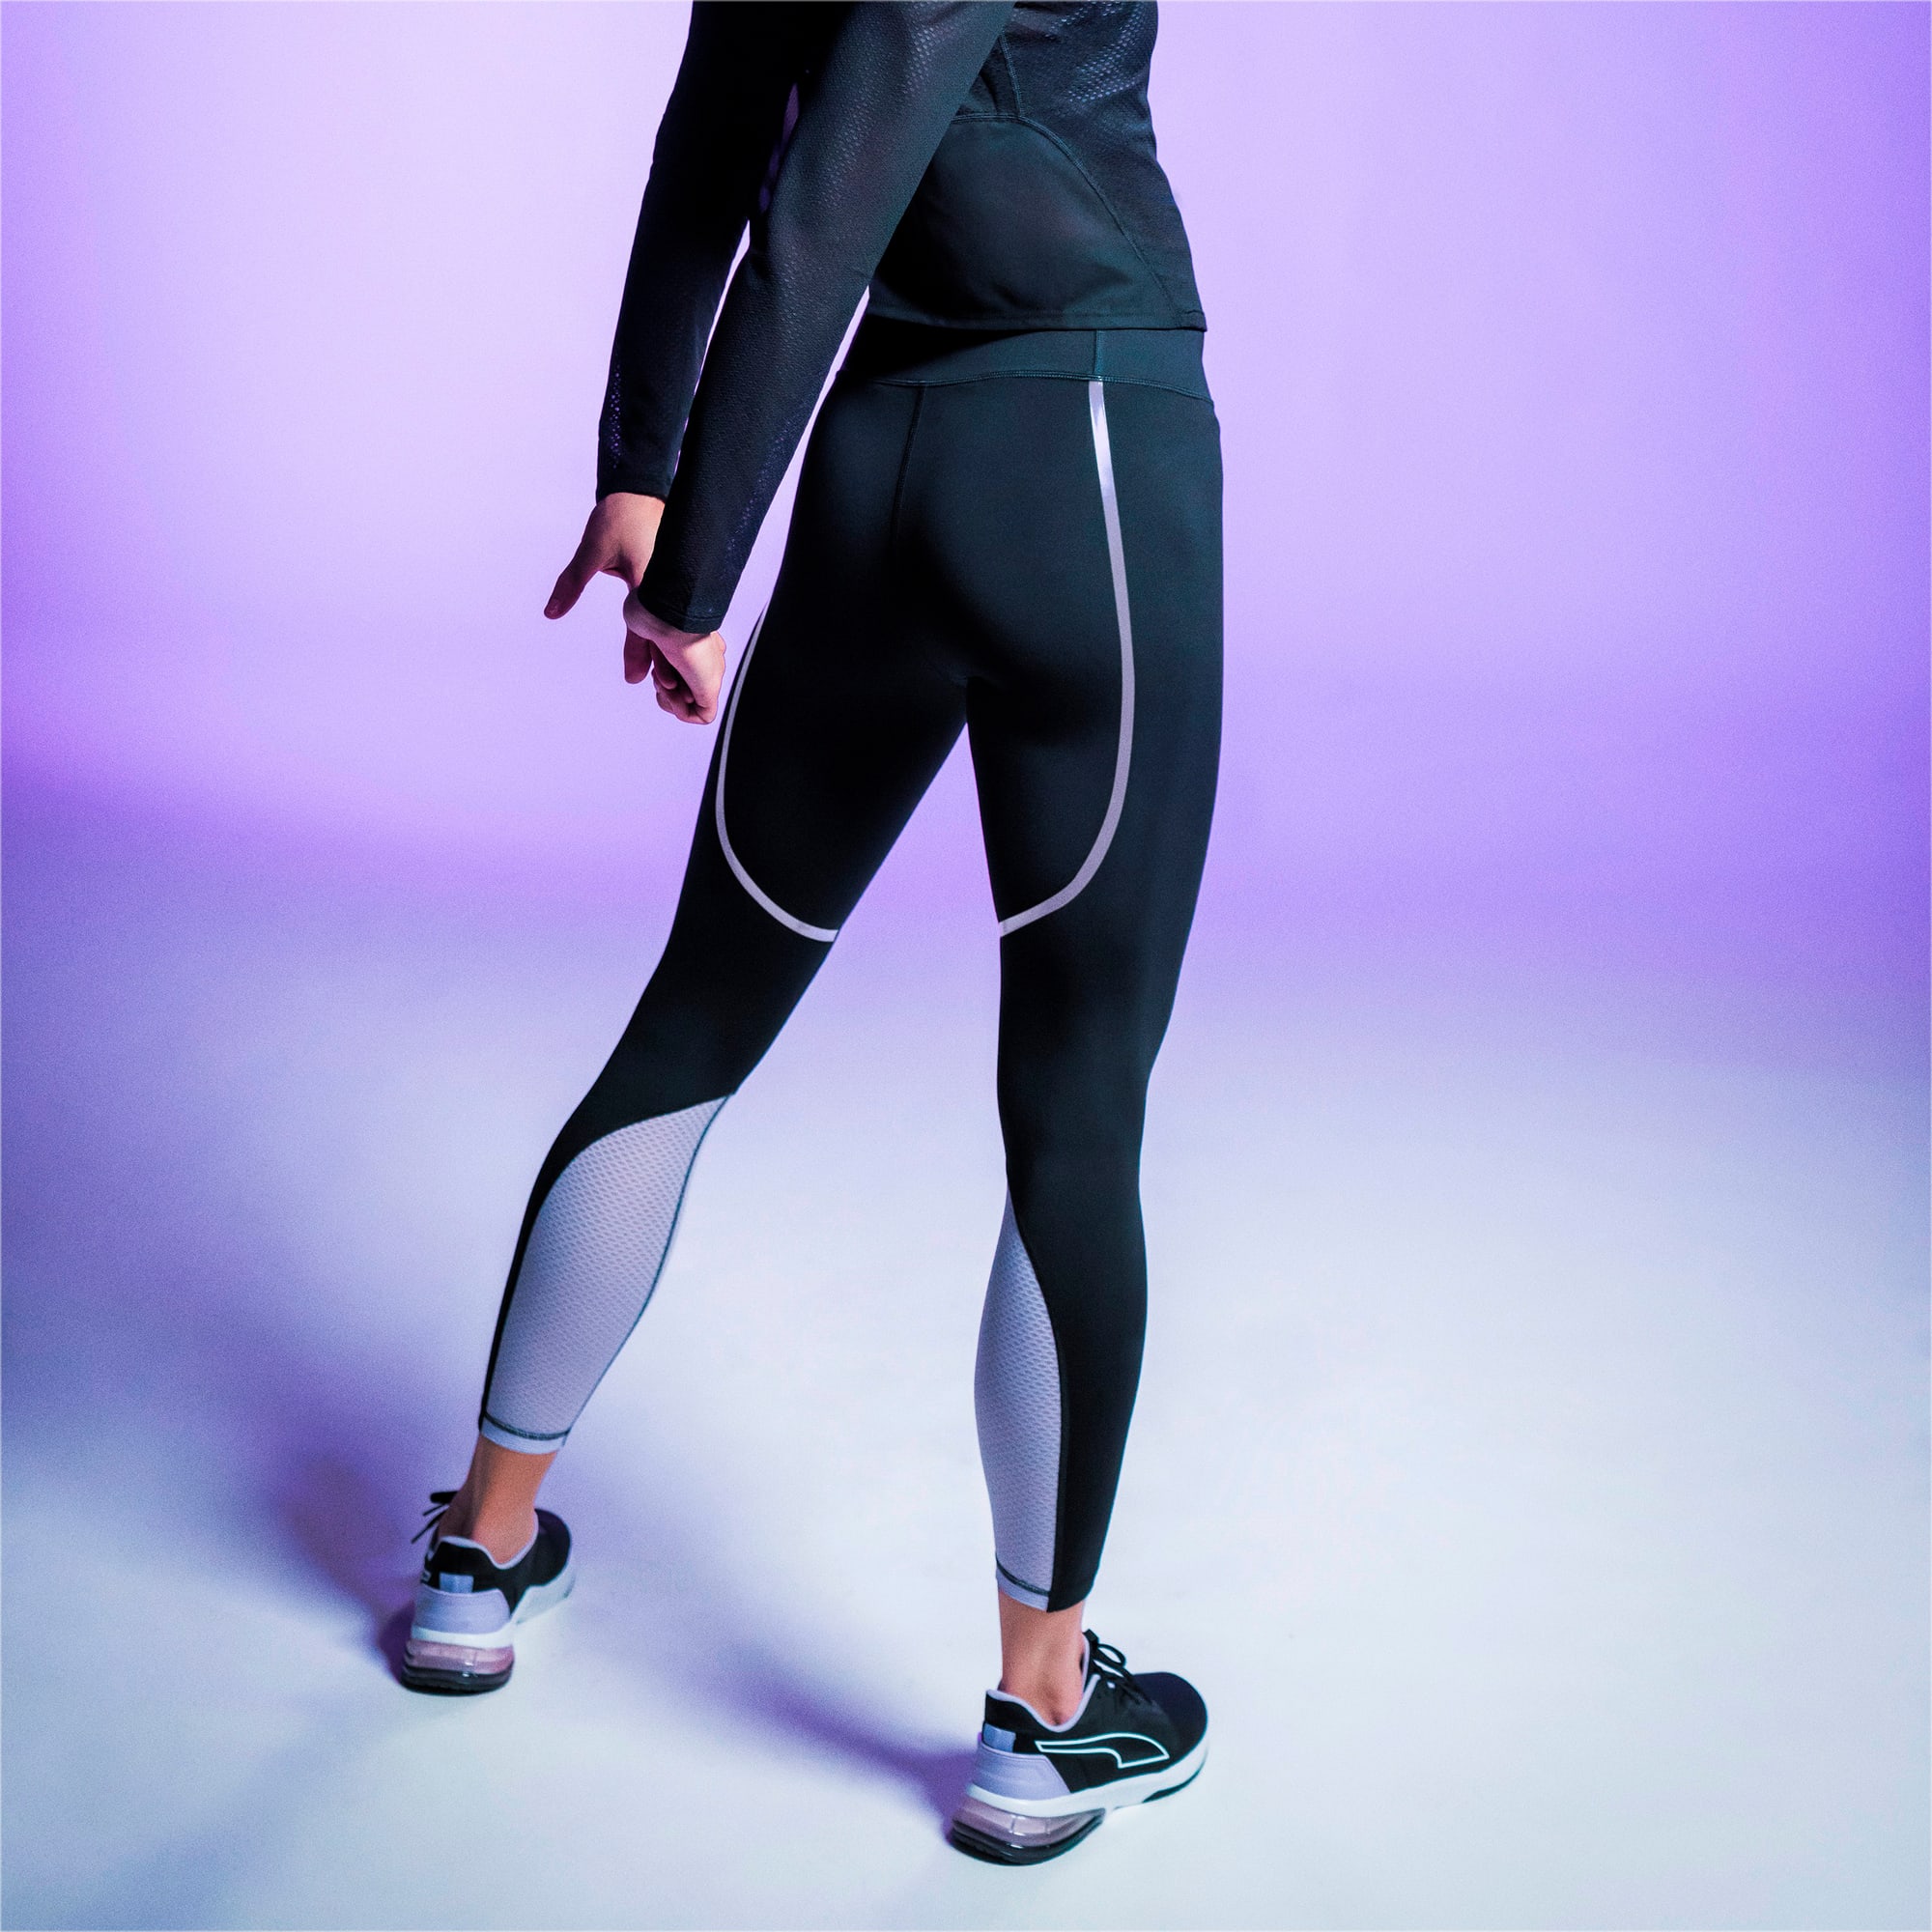 PUMA Training Fit leggings in black and white